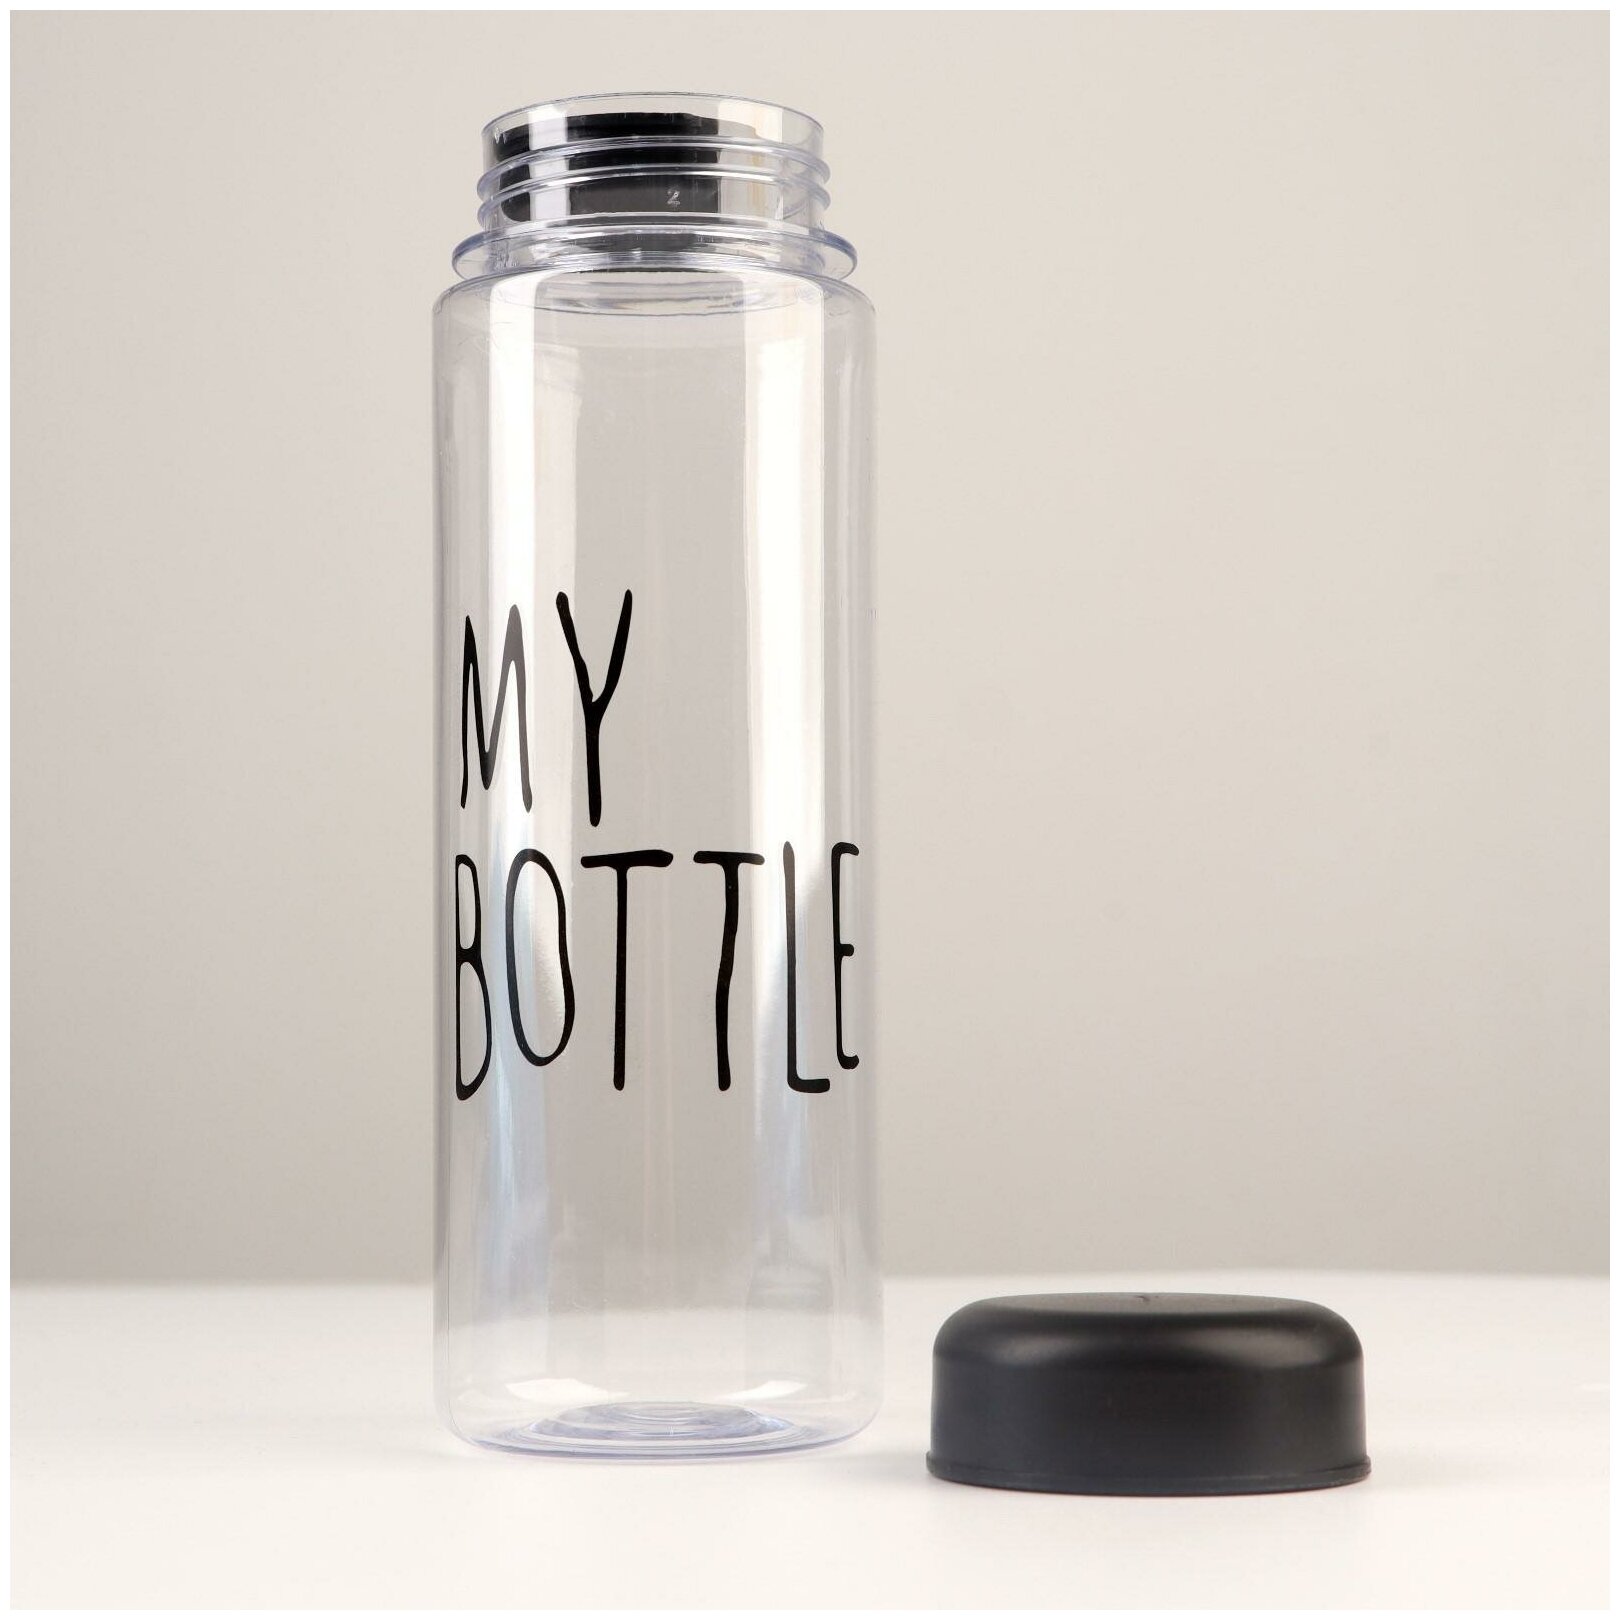 Бутылка для воды "My bottle", объем 500 мл, размер 19 х 6.5 см, цвет черный - фотография № 2